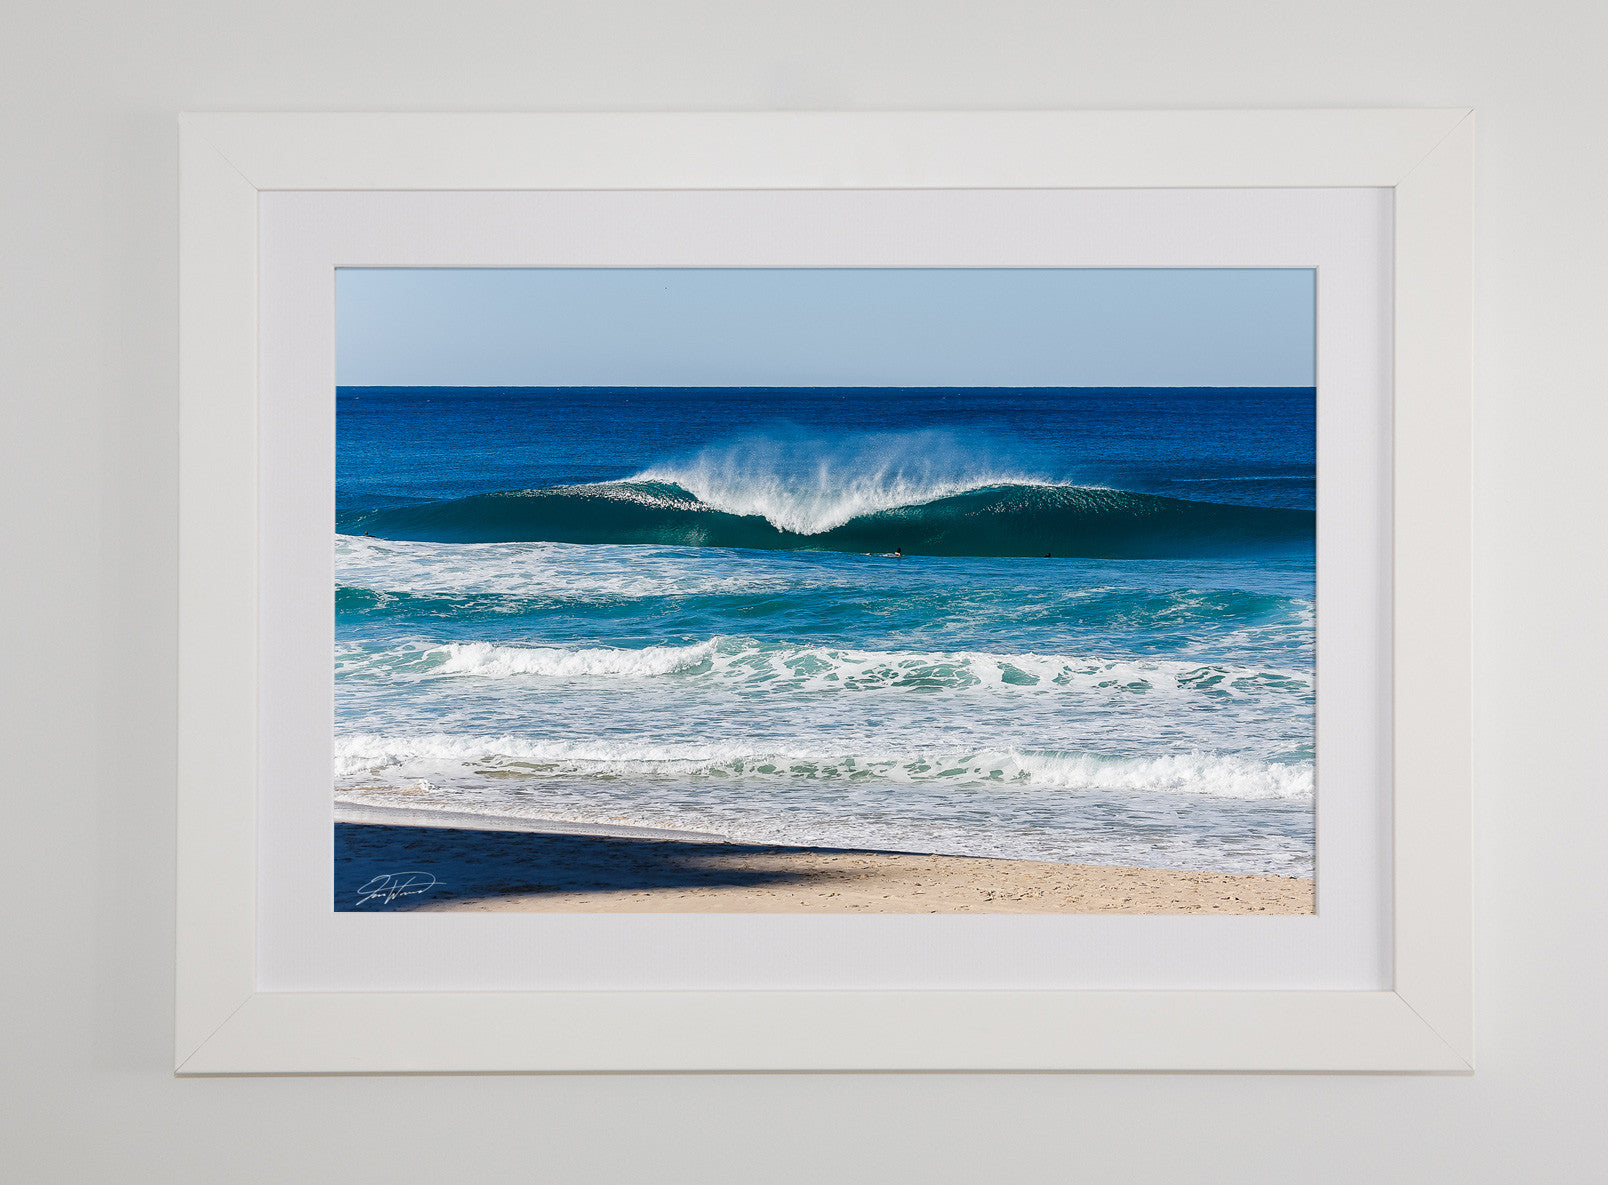 A frame - Narrowneck beach - QLD, Australia